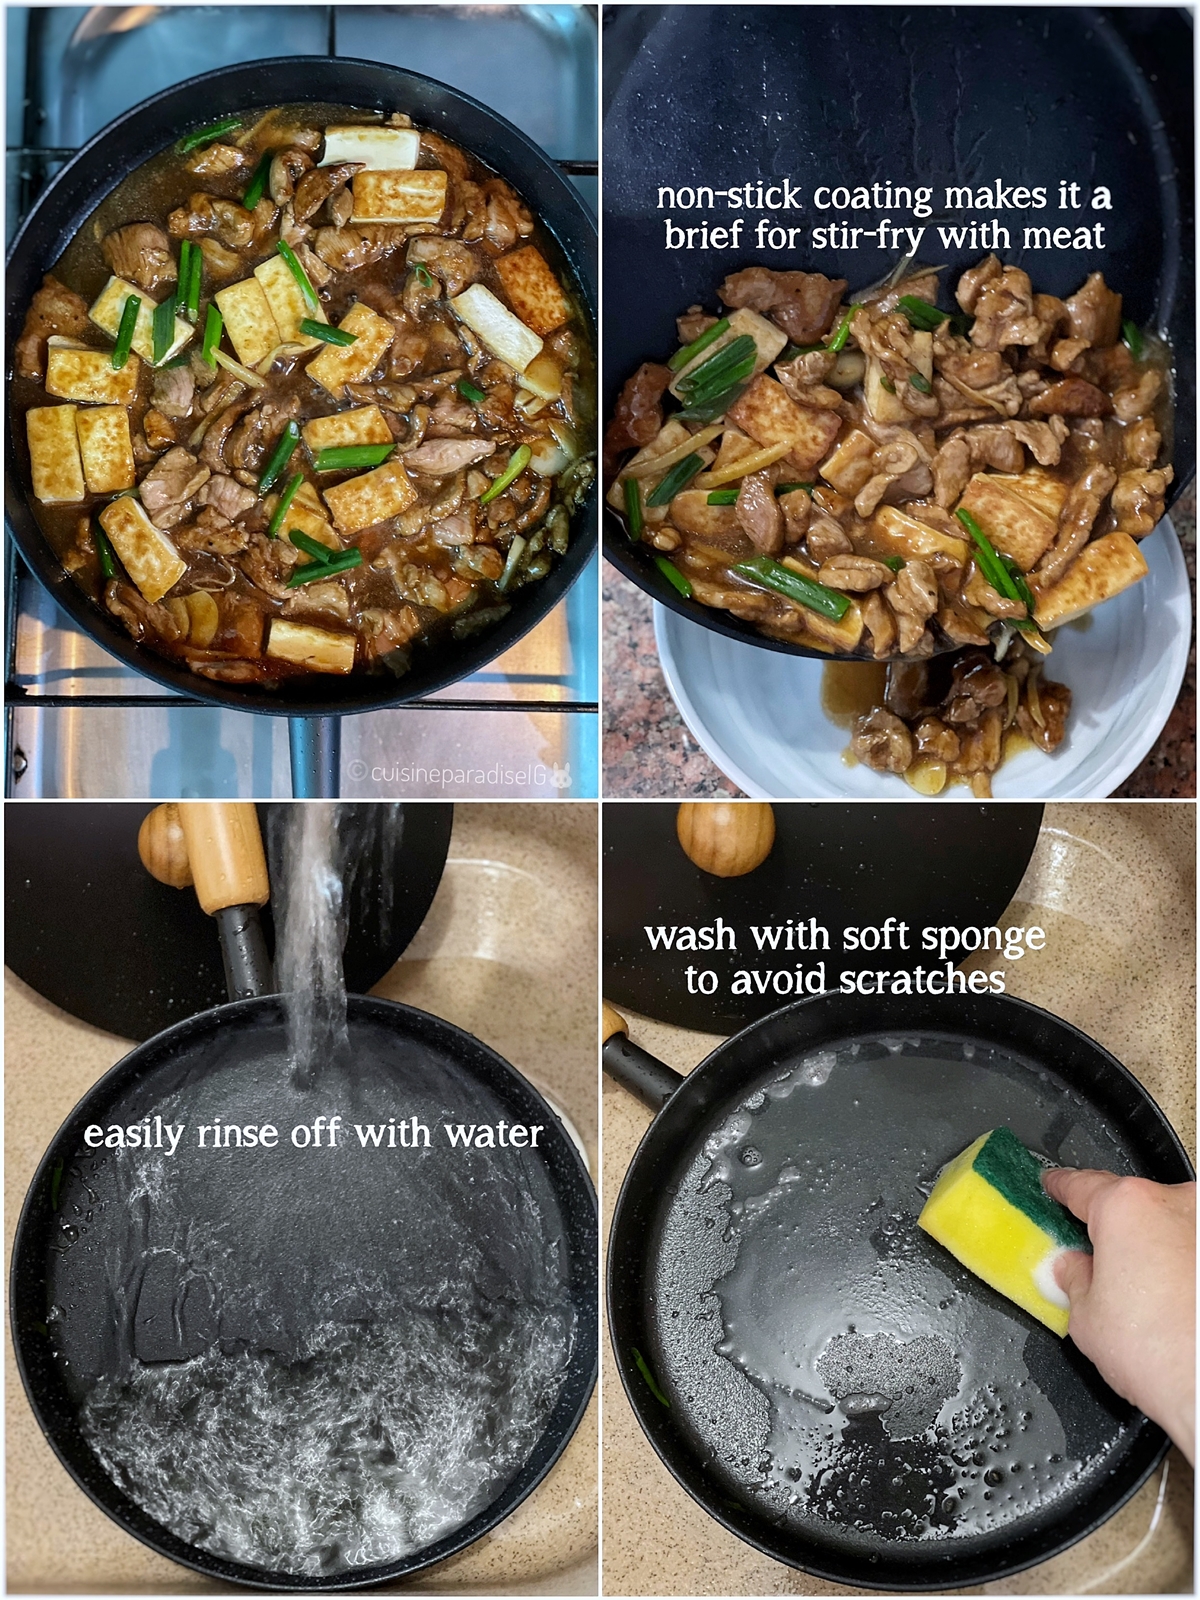 [Modori] Goodle Korean Cookware (4 Types)